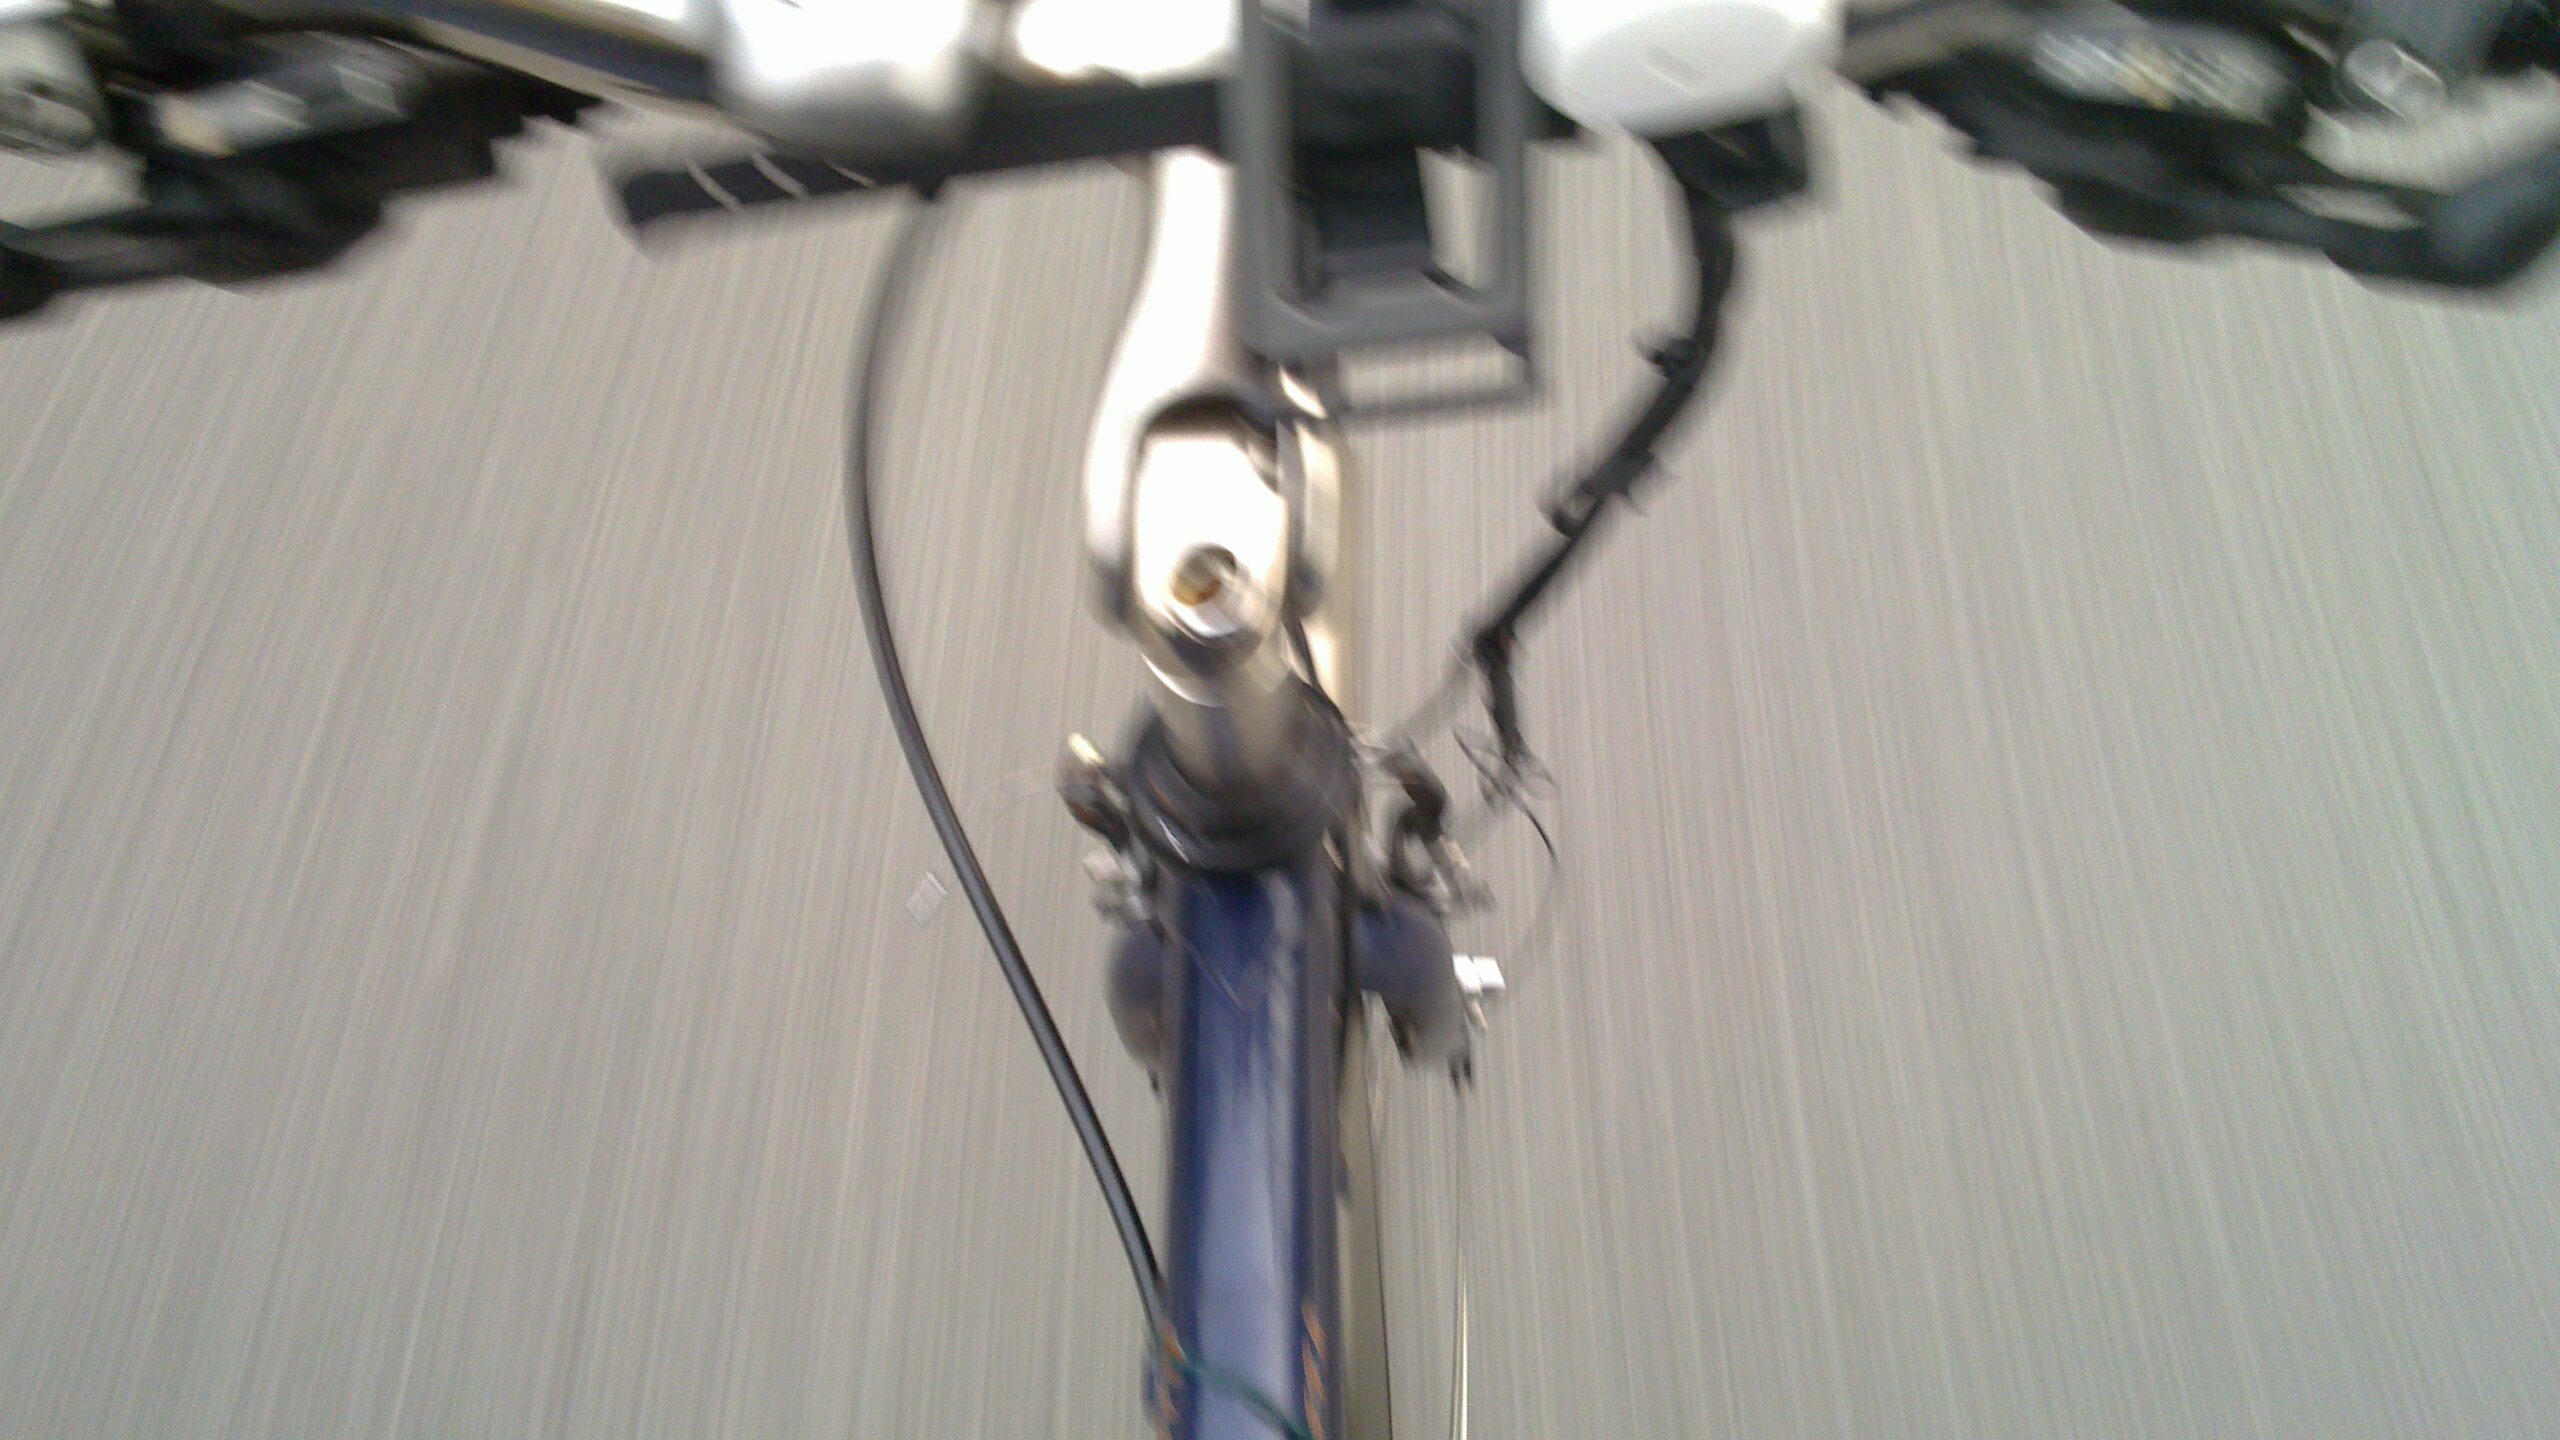 blurry po of the inside of a bike handle